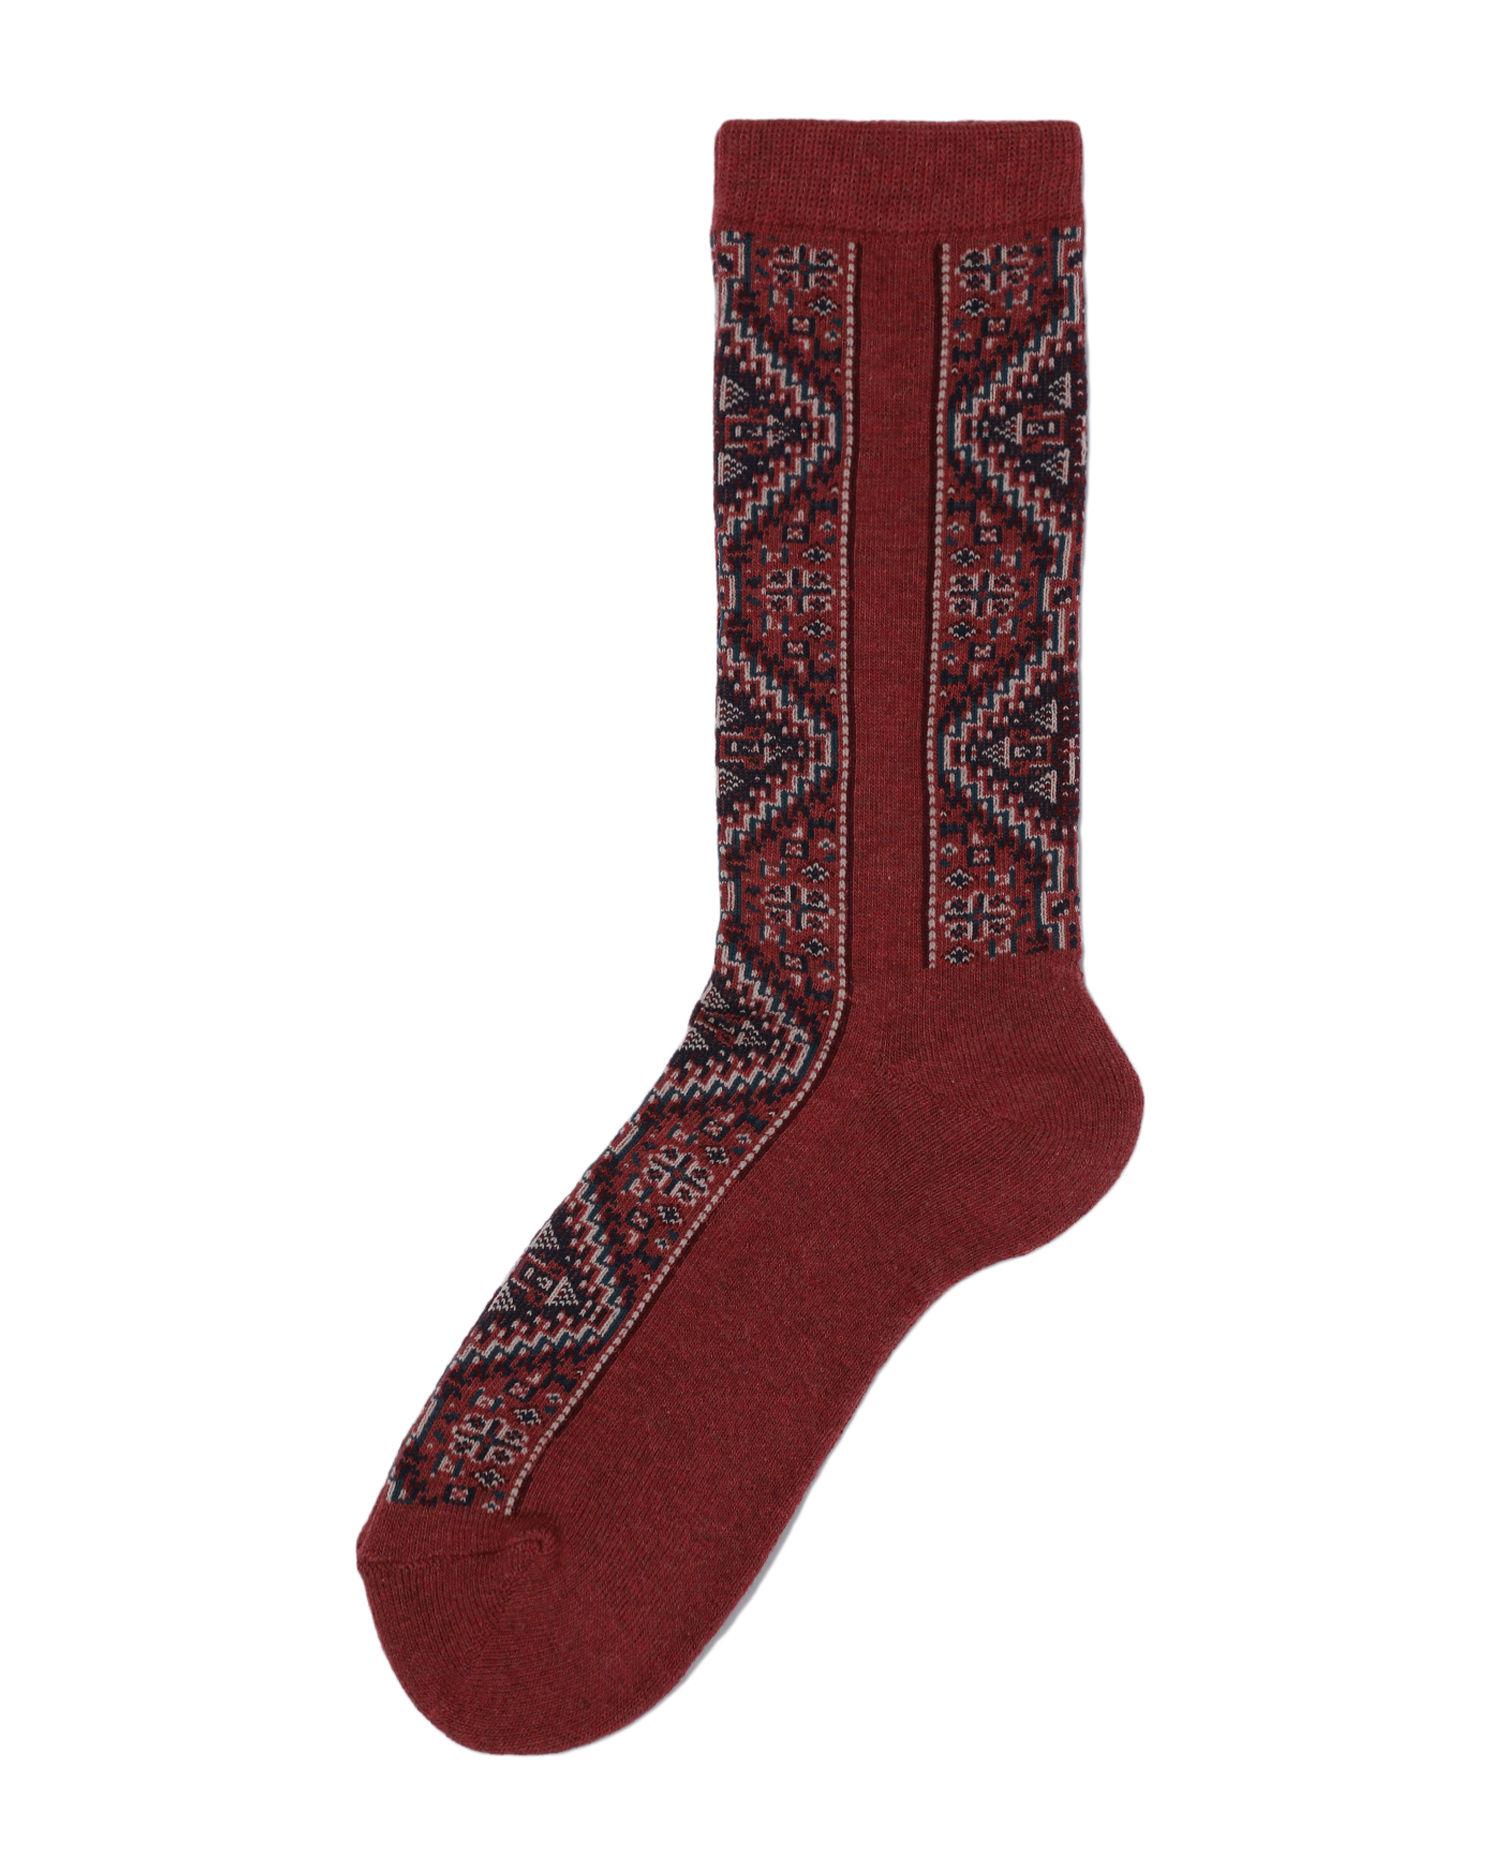 Pattern intarsia socks by BEAMS